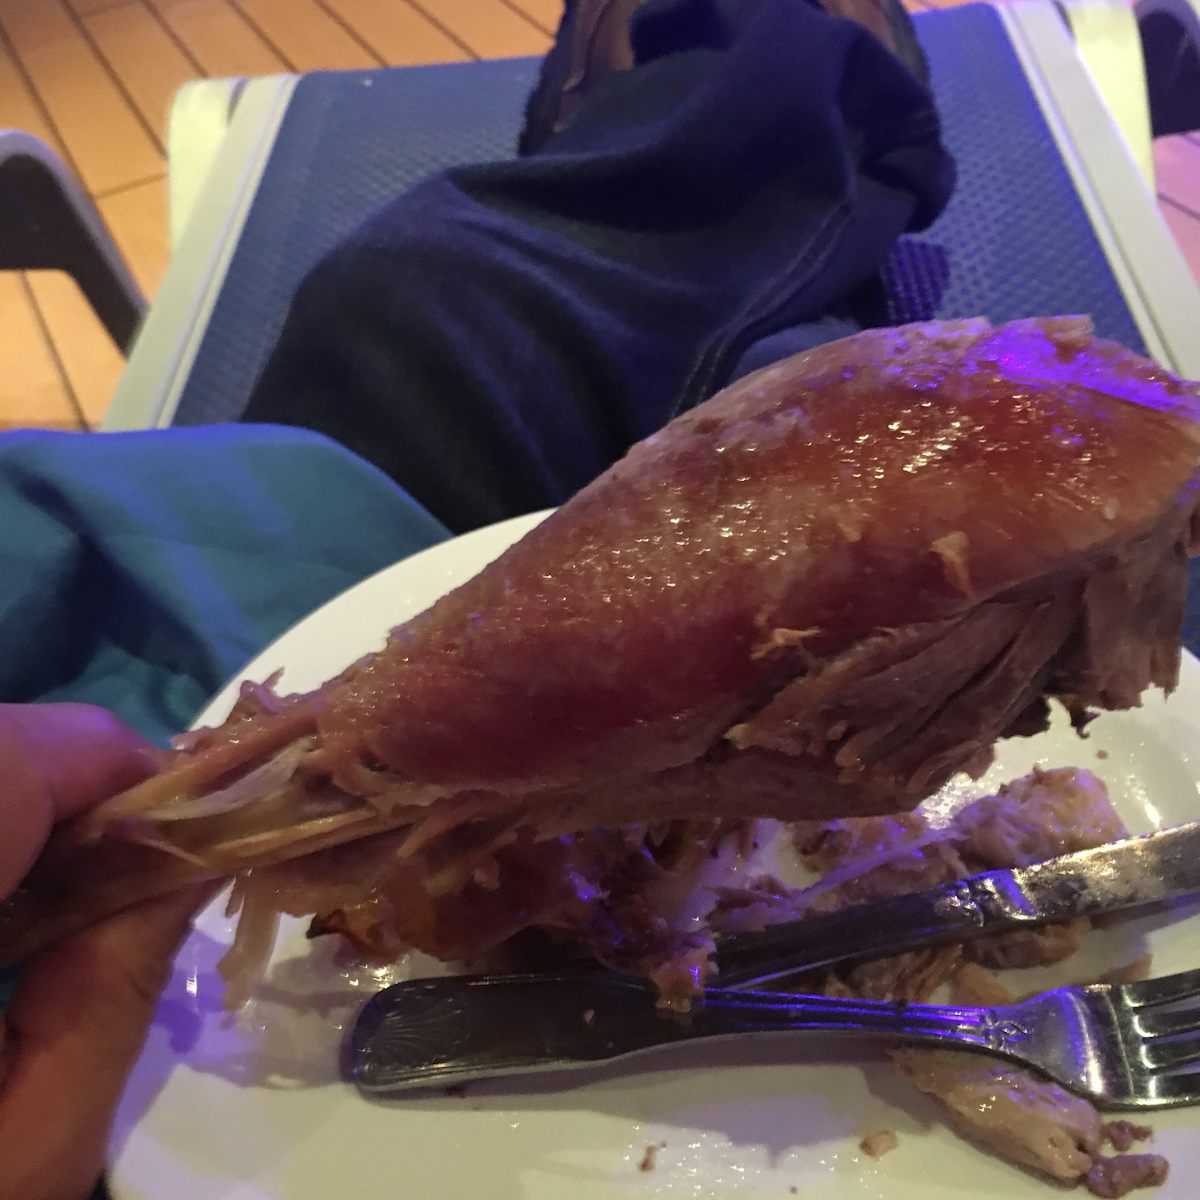 Giant turkey leg from the buffet